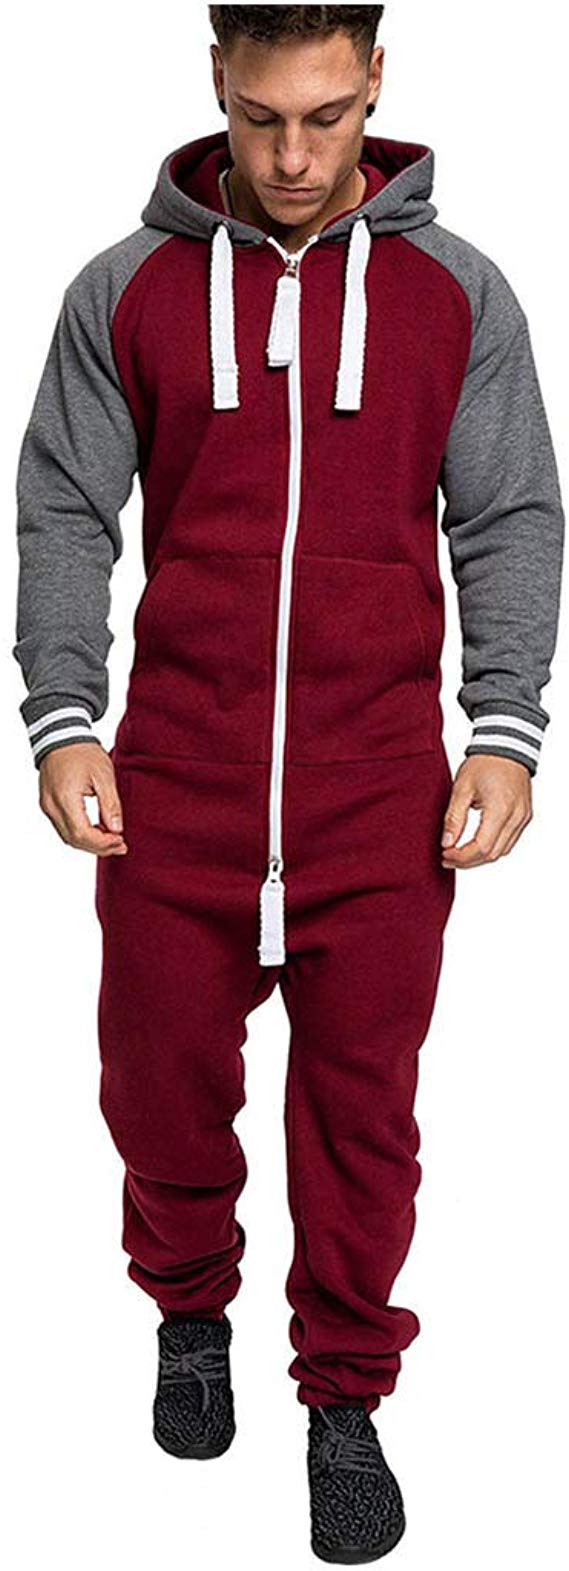 Men's Hooded Onesie Jumpsuit Sports Romper Overall Zip up Playsuit Drawstring Sportswear Adult Overall Hoodie